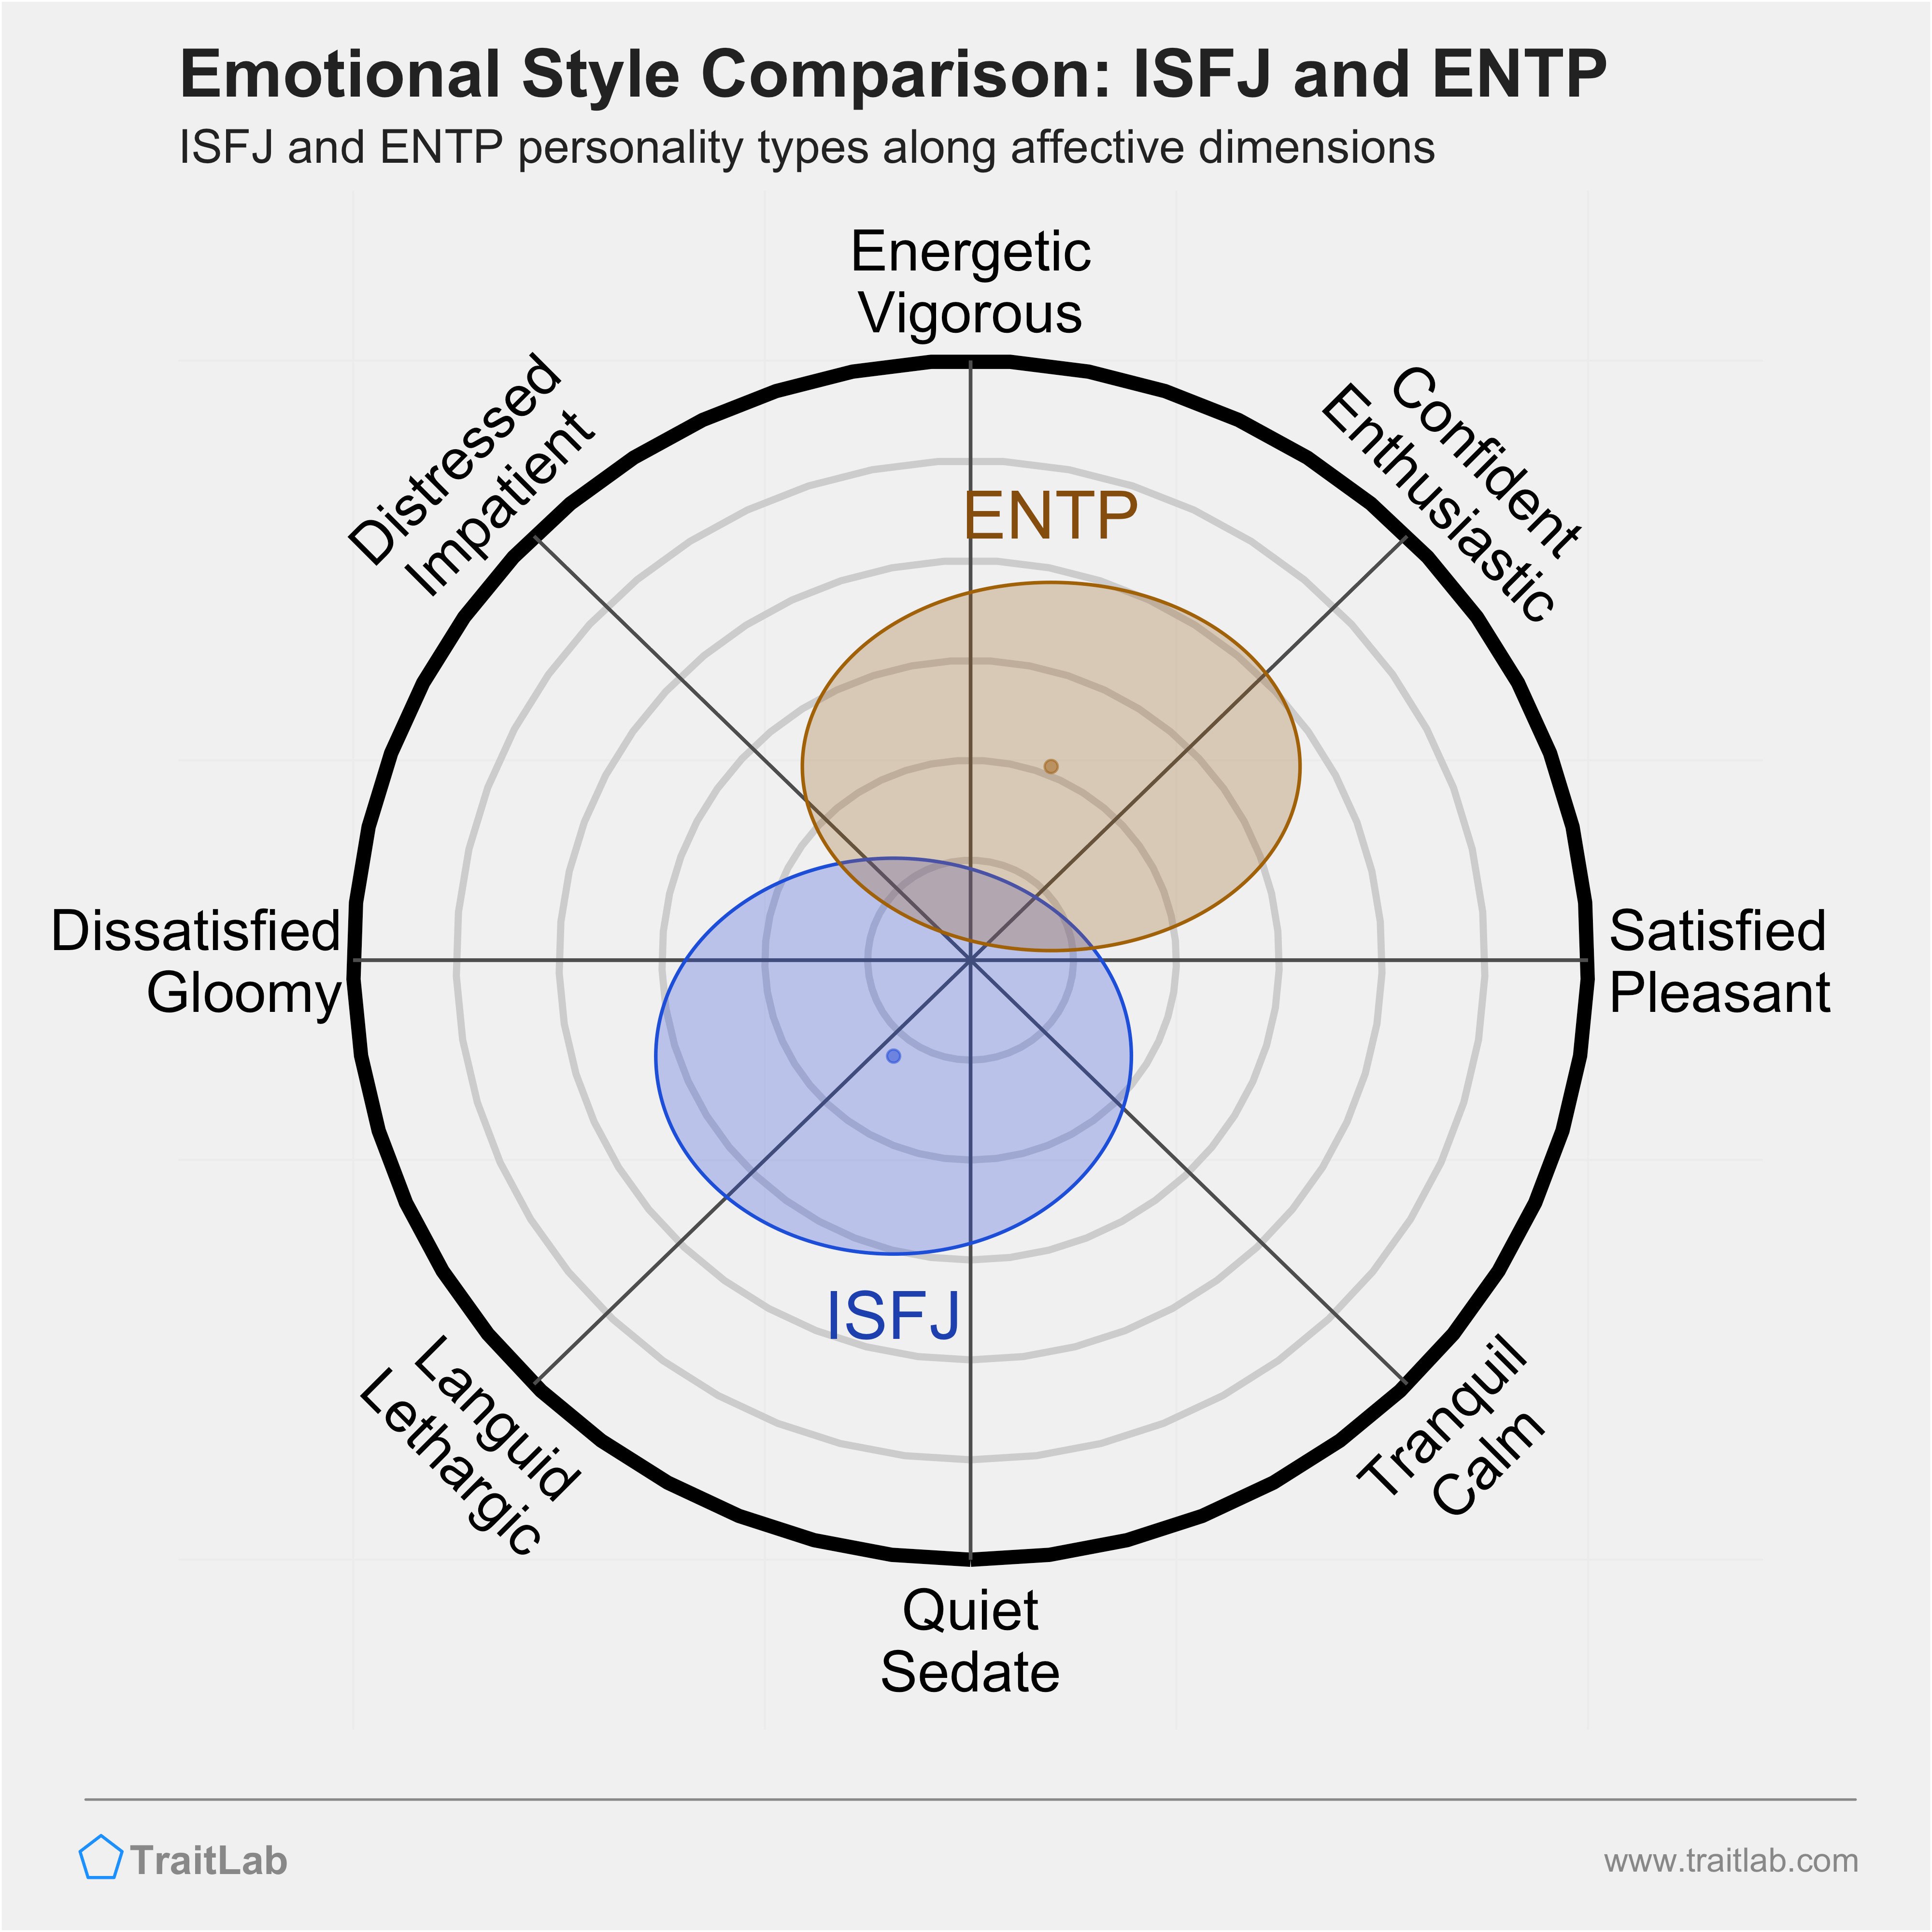 ISFJ and ENTP comparison across emotional (affective) dimensions